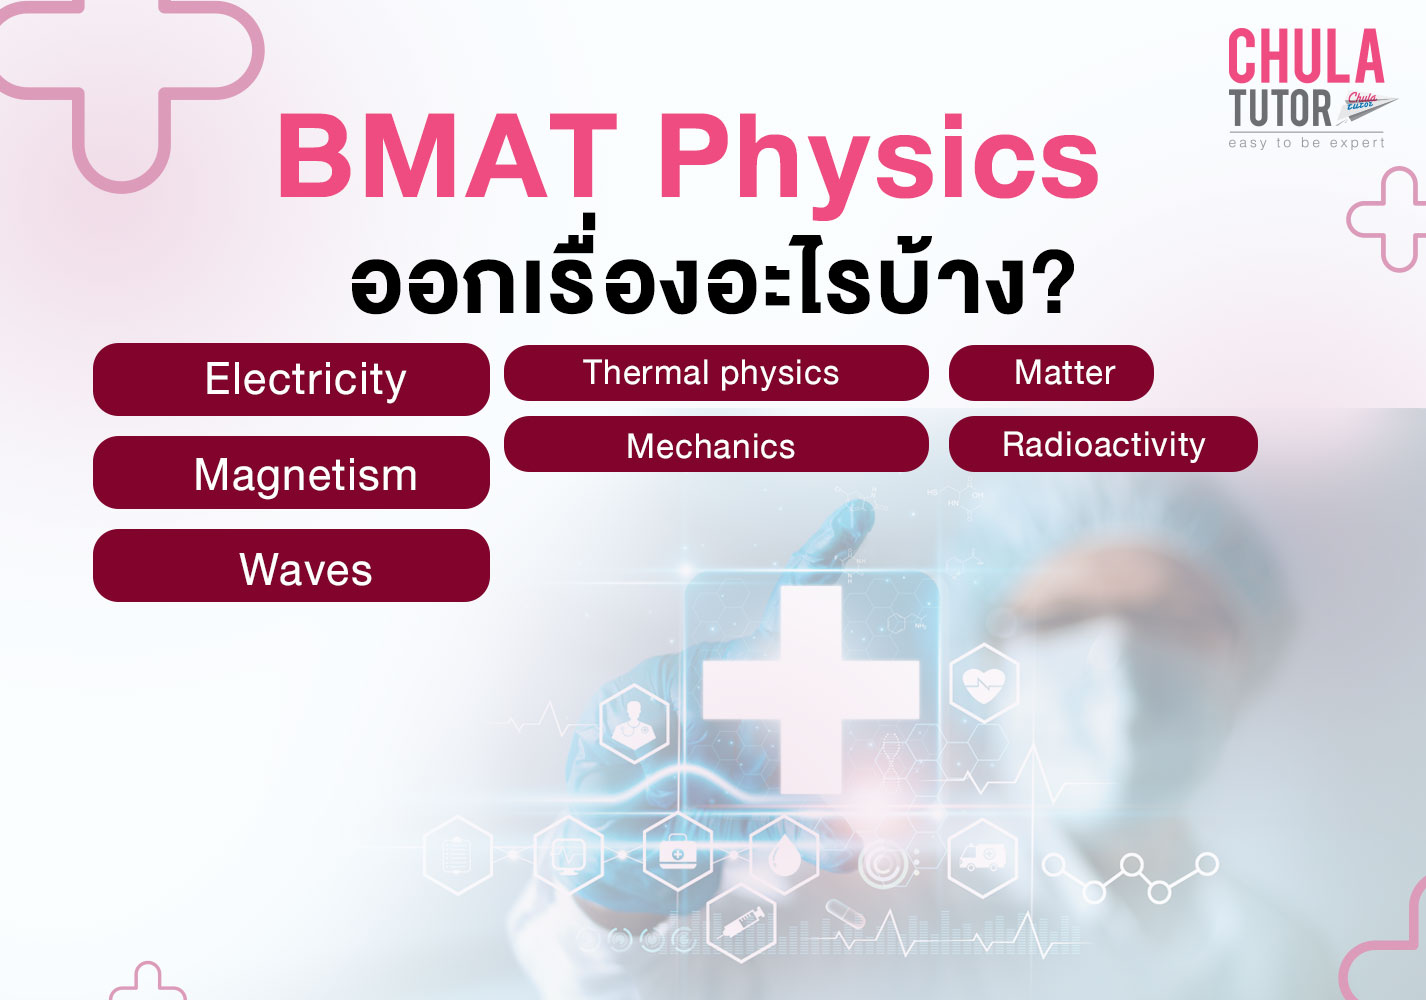 BMAT Physics